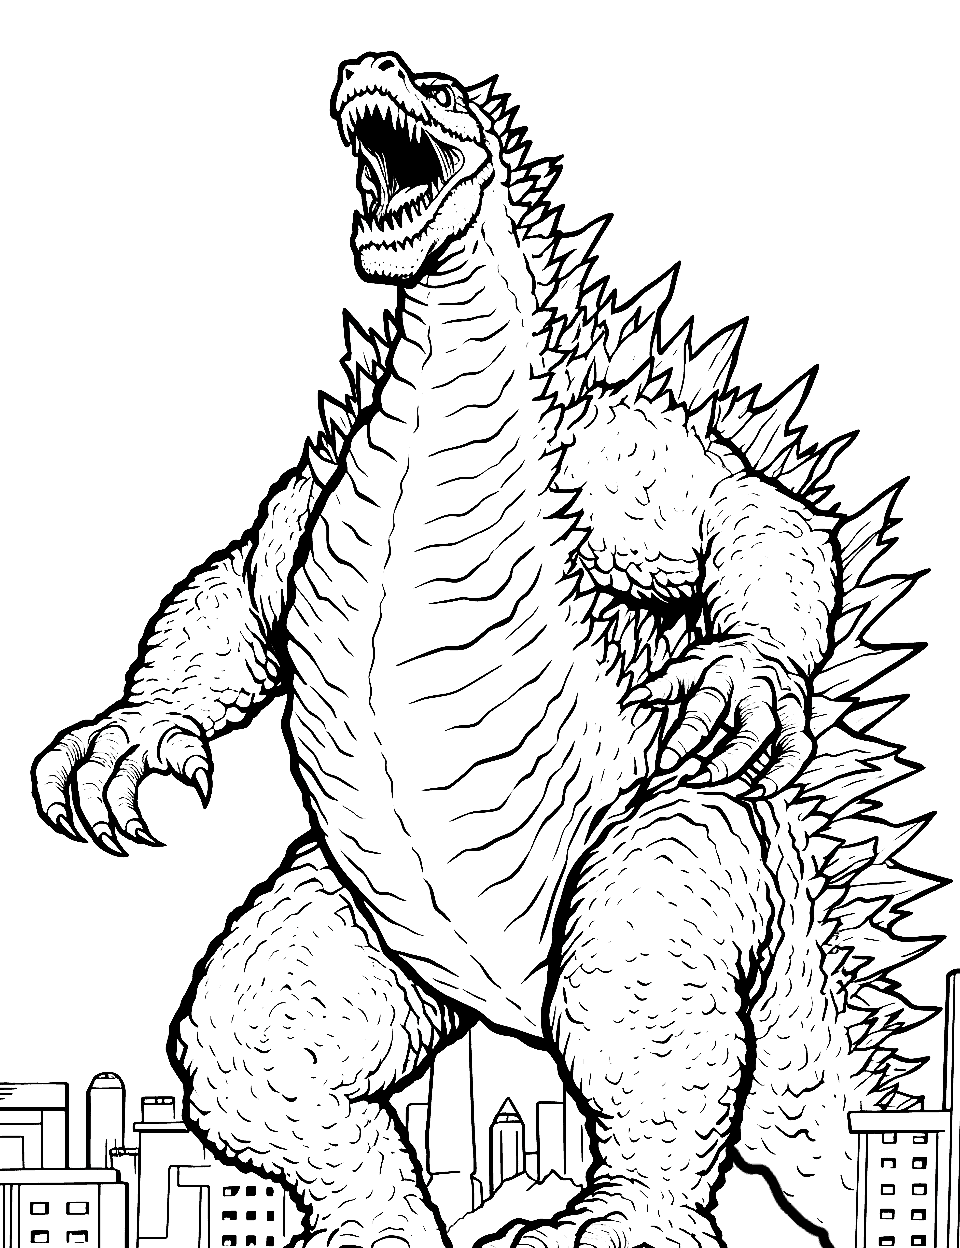 Shin Godzilla Pose Coloring Page - Godzilla from the Shin series, standing tall with menacing eyes.